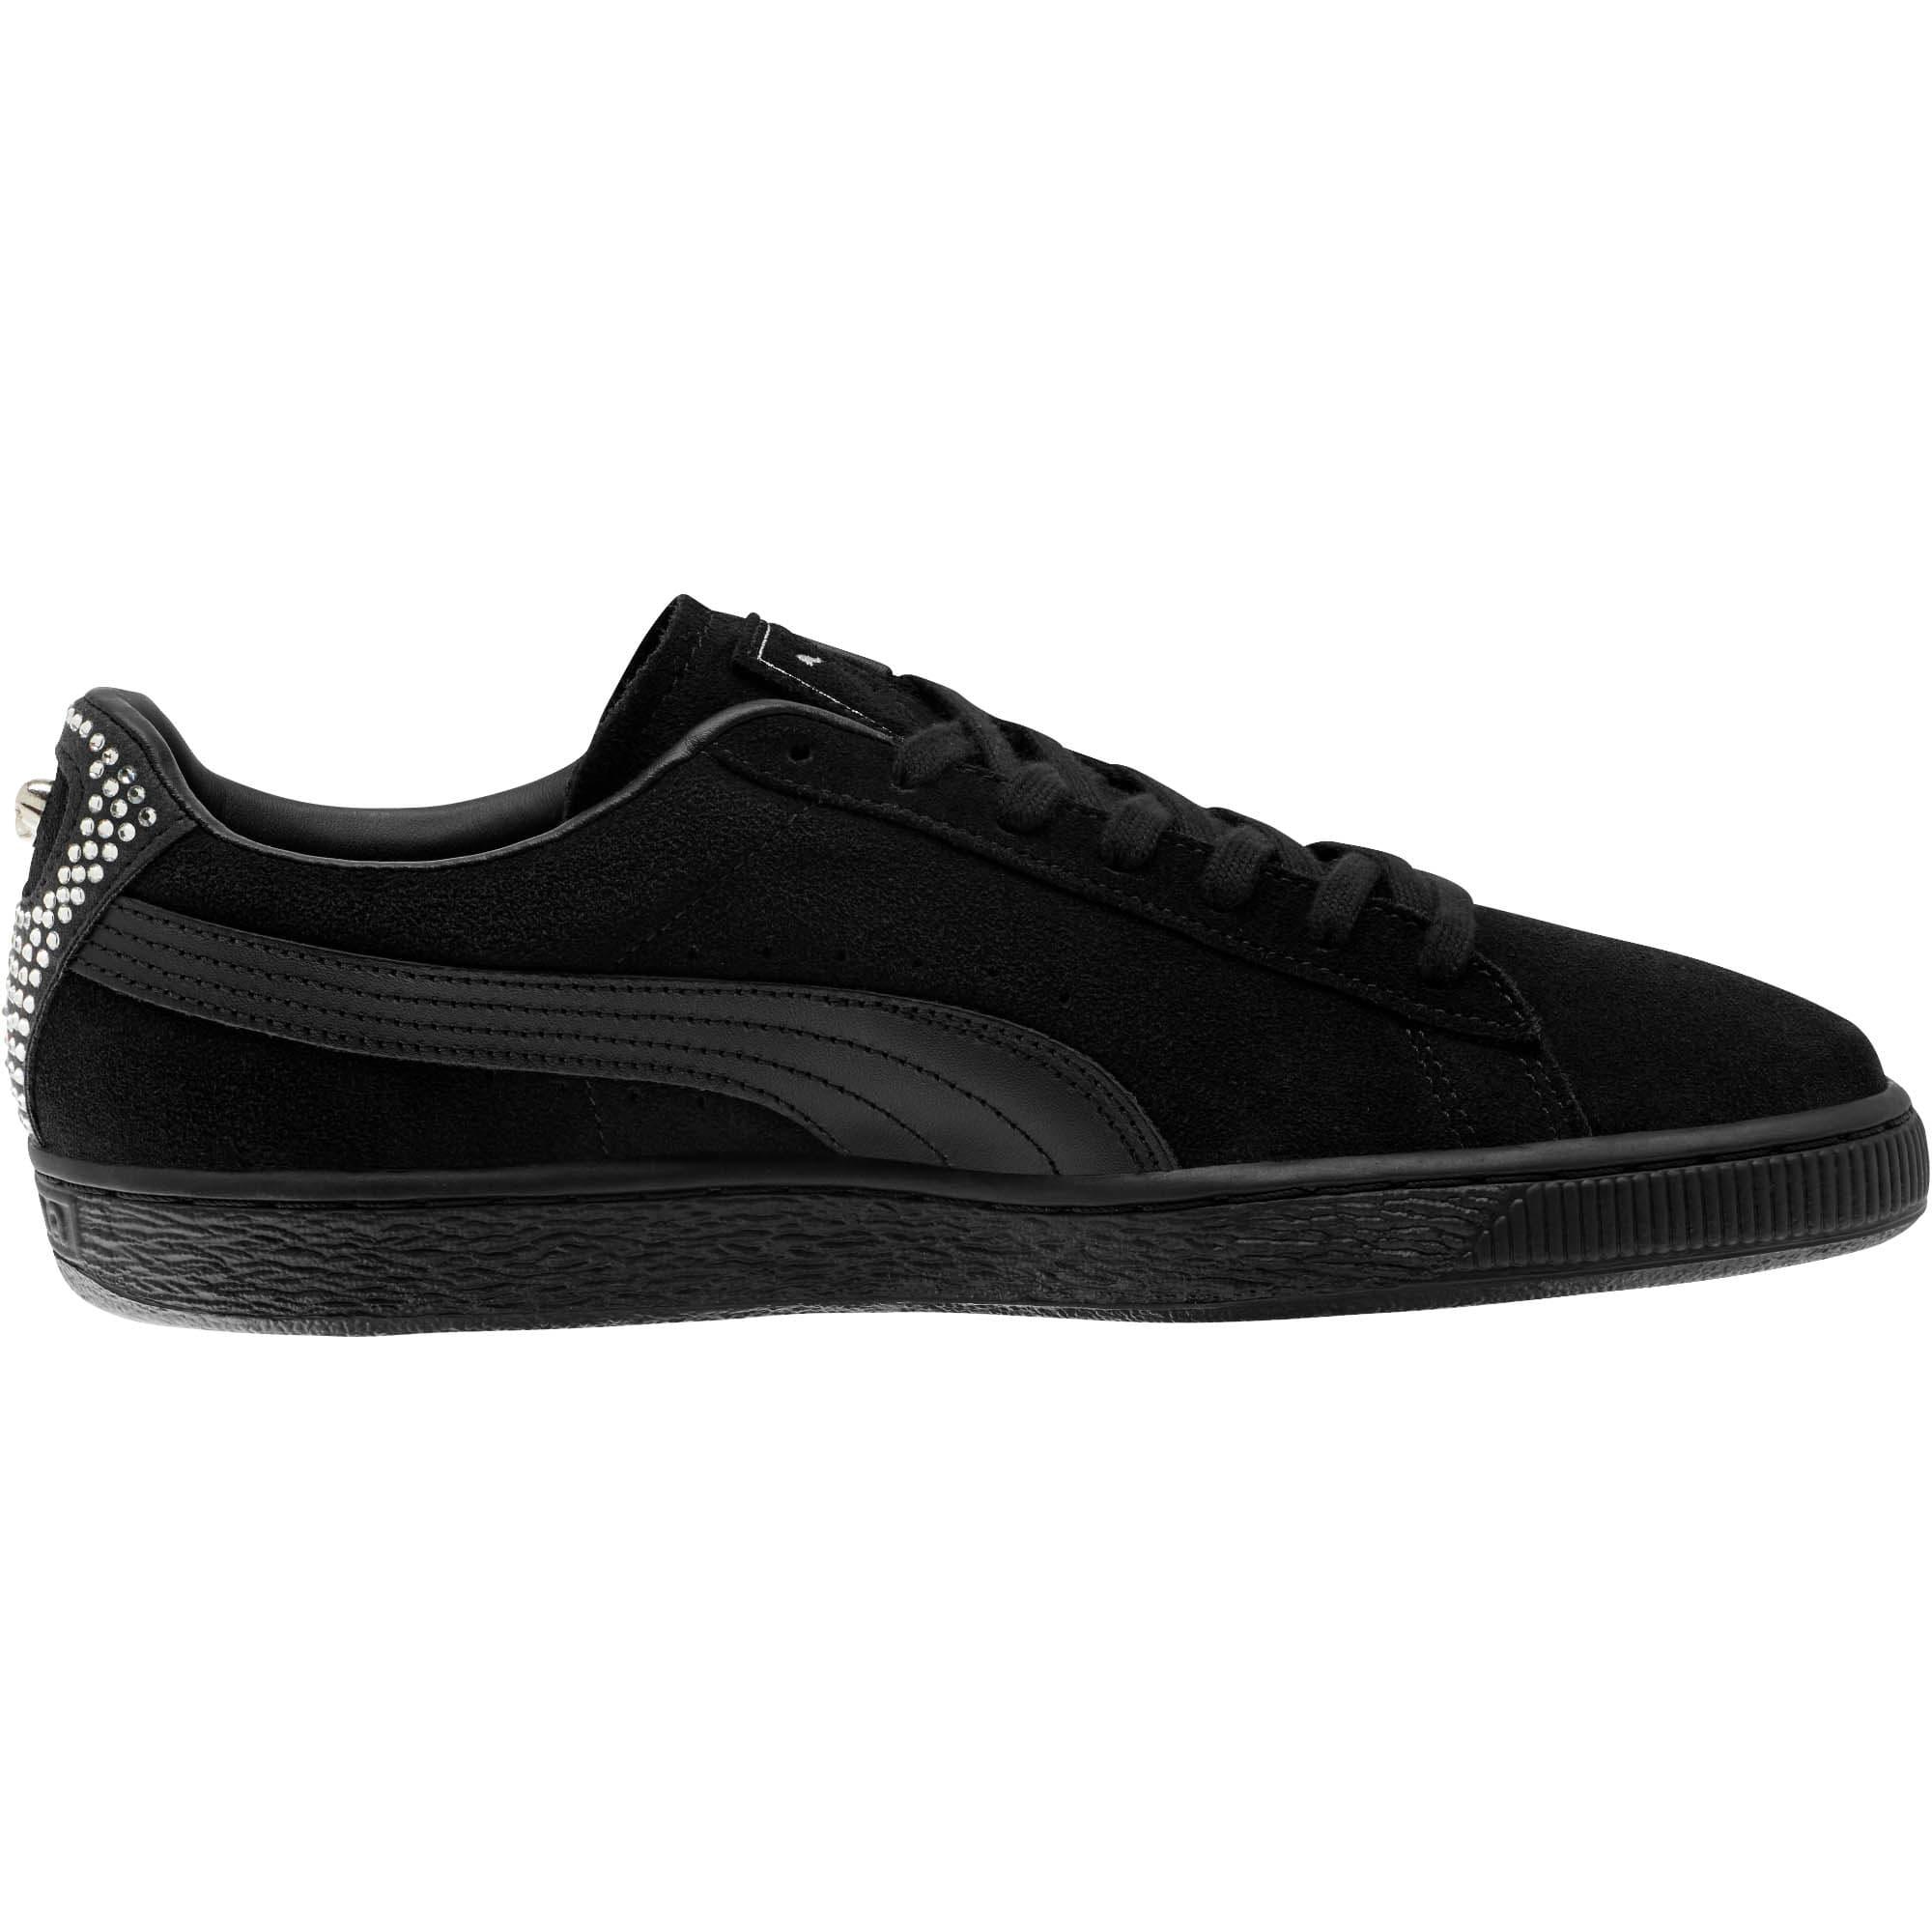 PUMA X The Kooples Suede Sneakers in Black for Men - Lyst